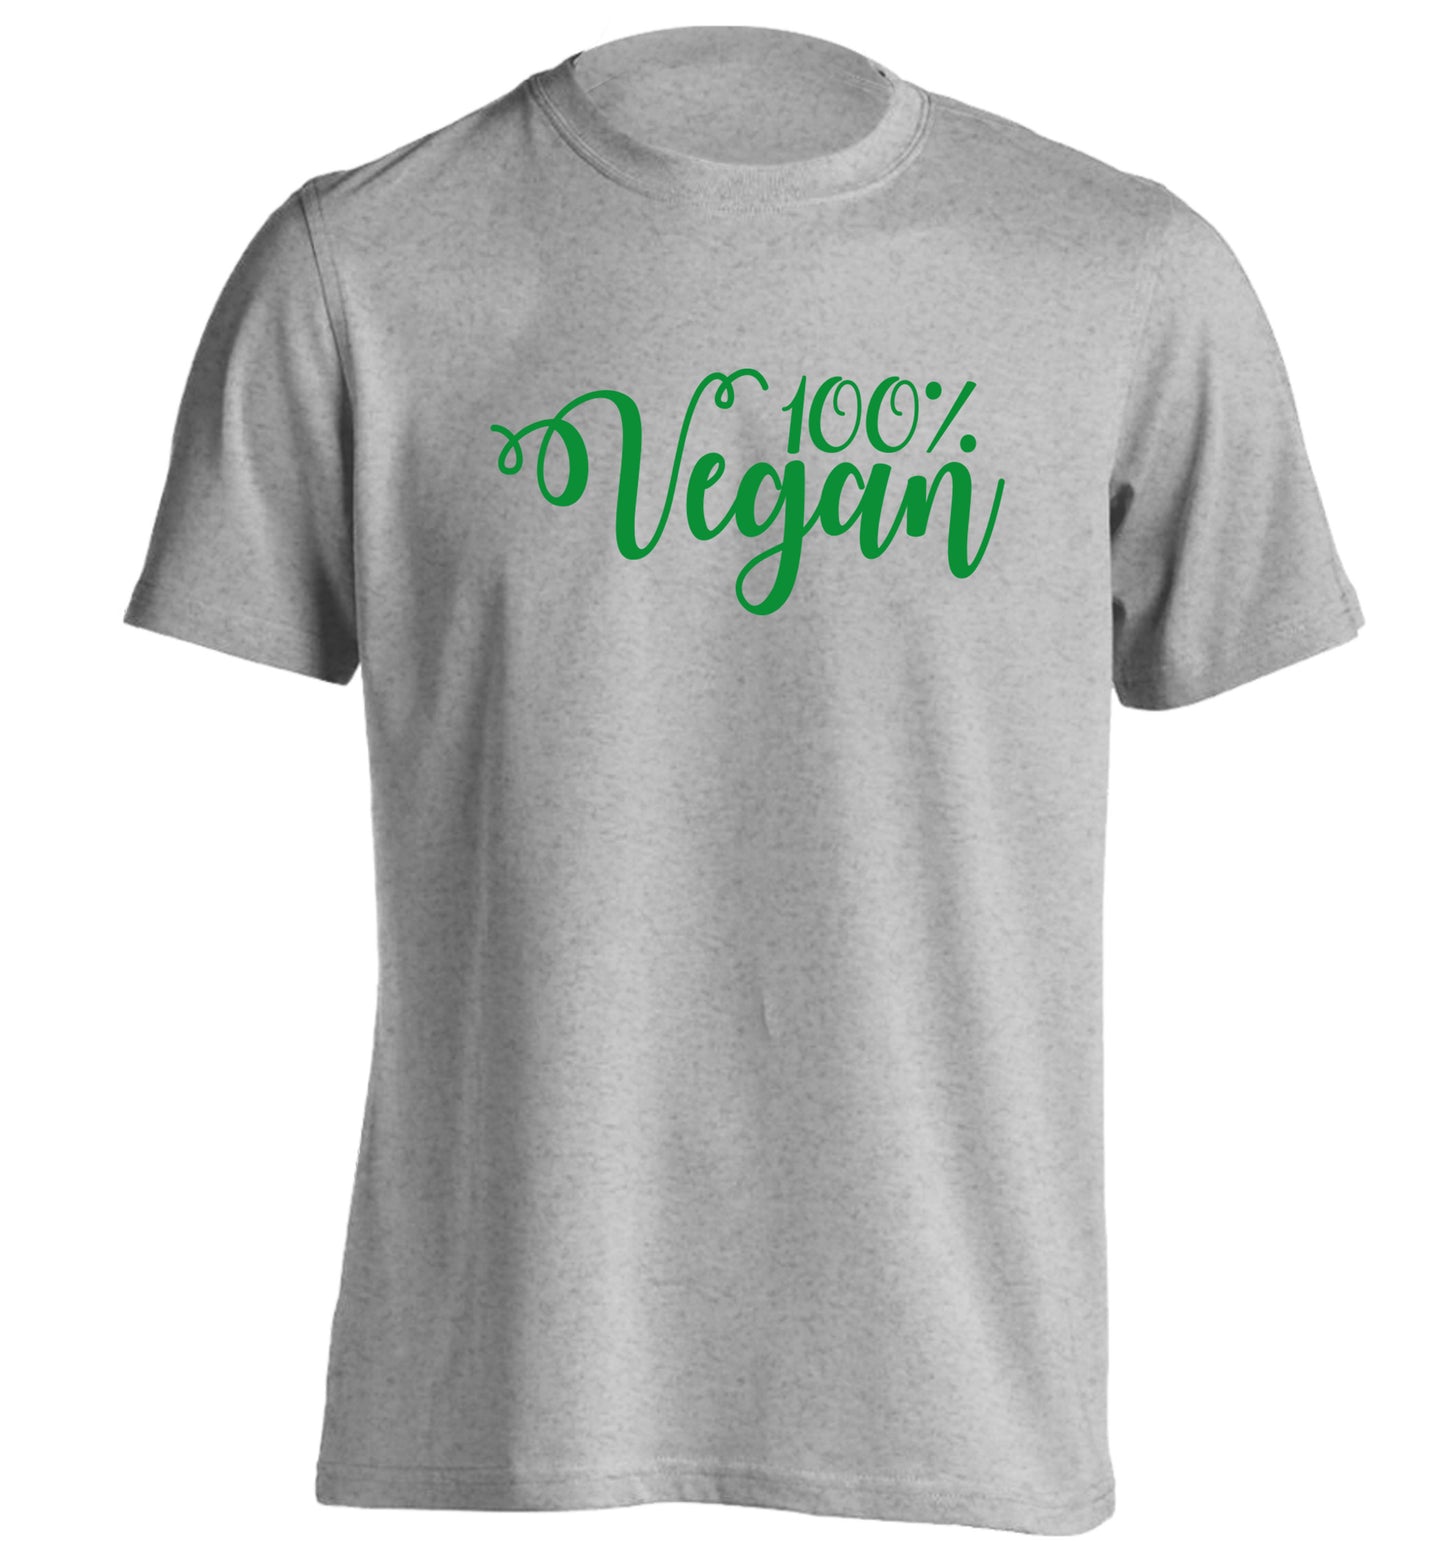 100% Vegan adults unisex grey Tshirt 2XL